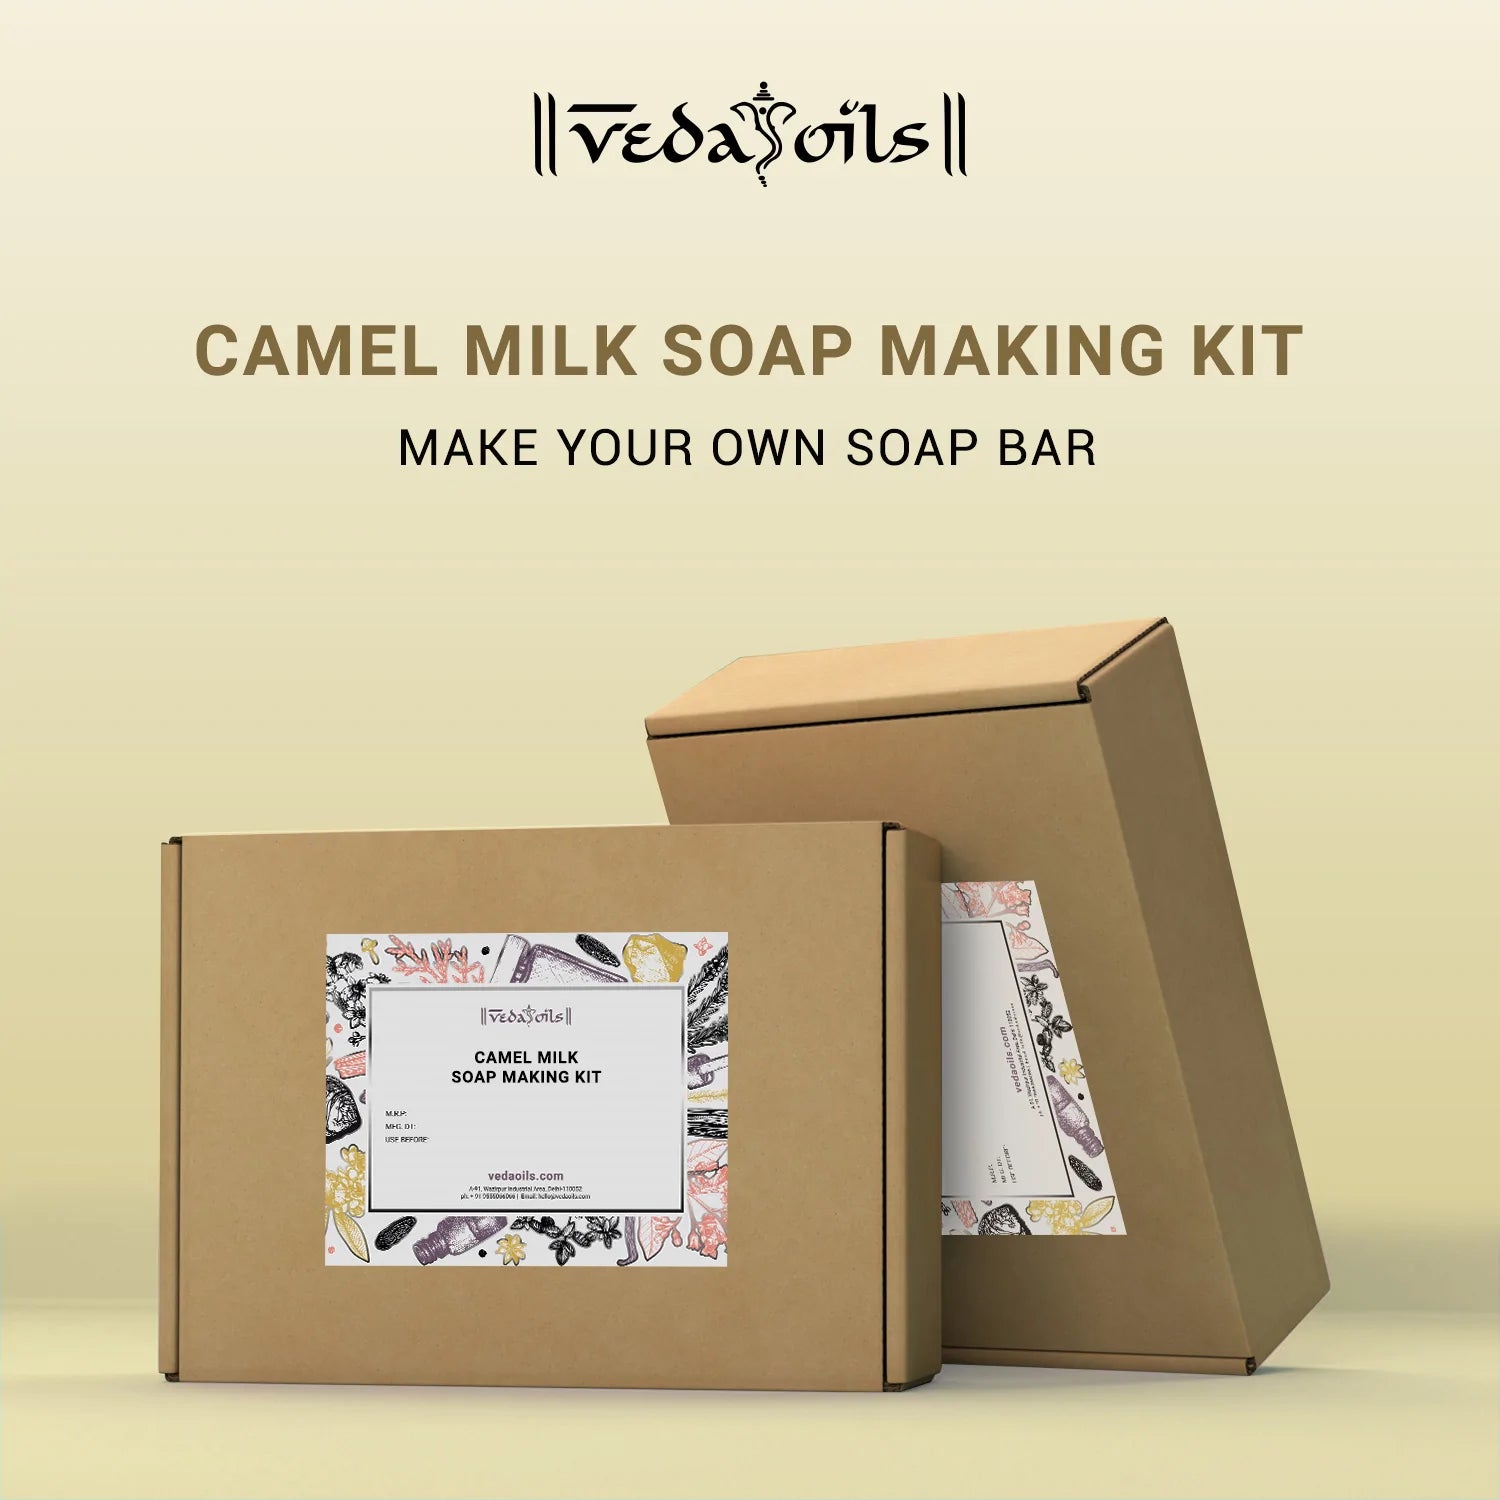 Camel Milk Soap Making Kit